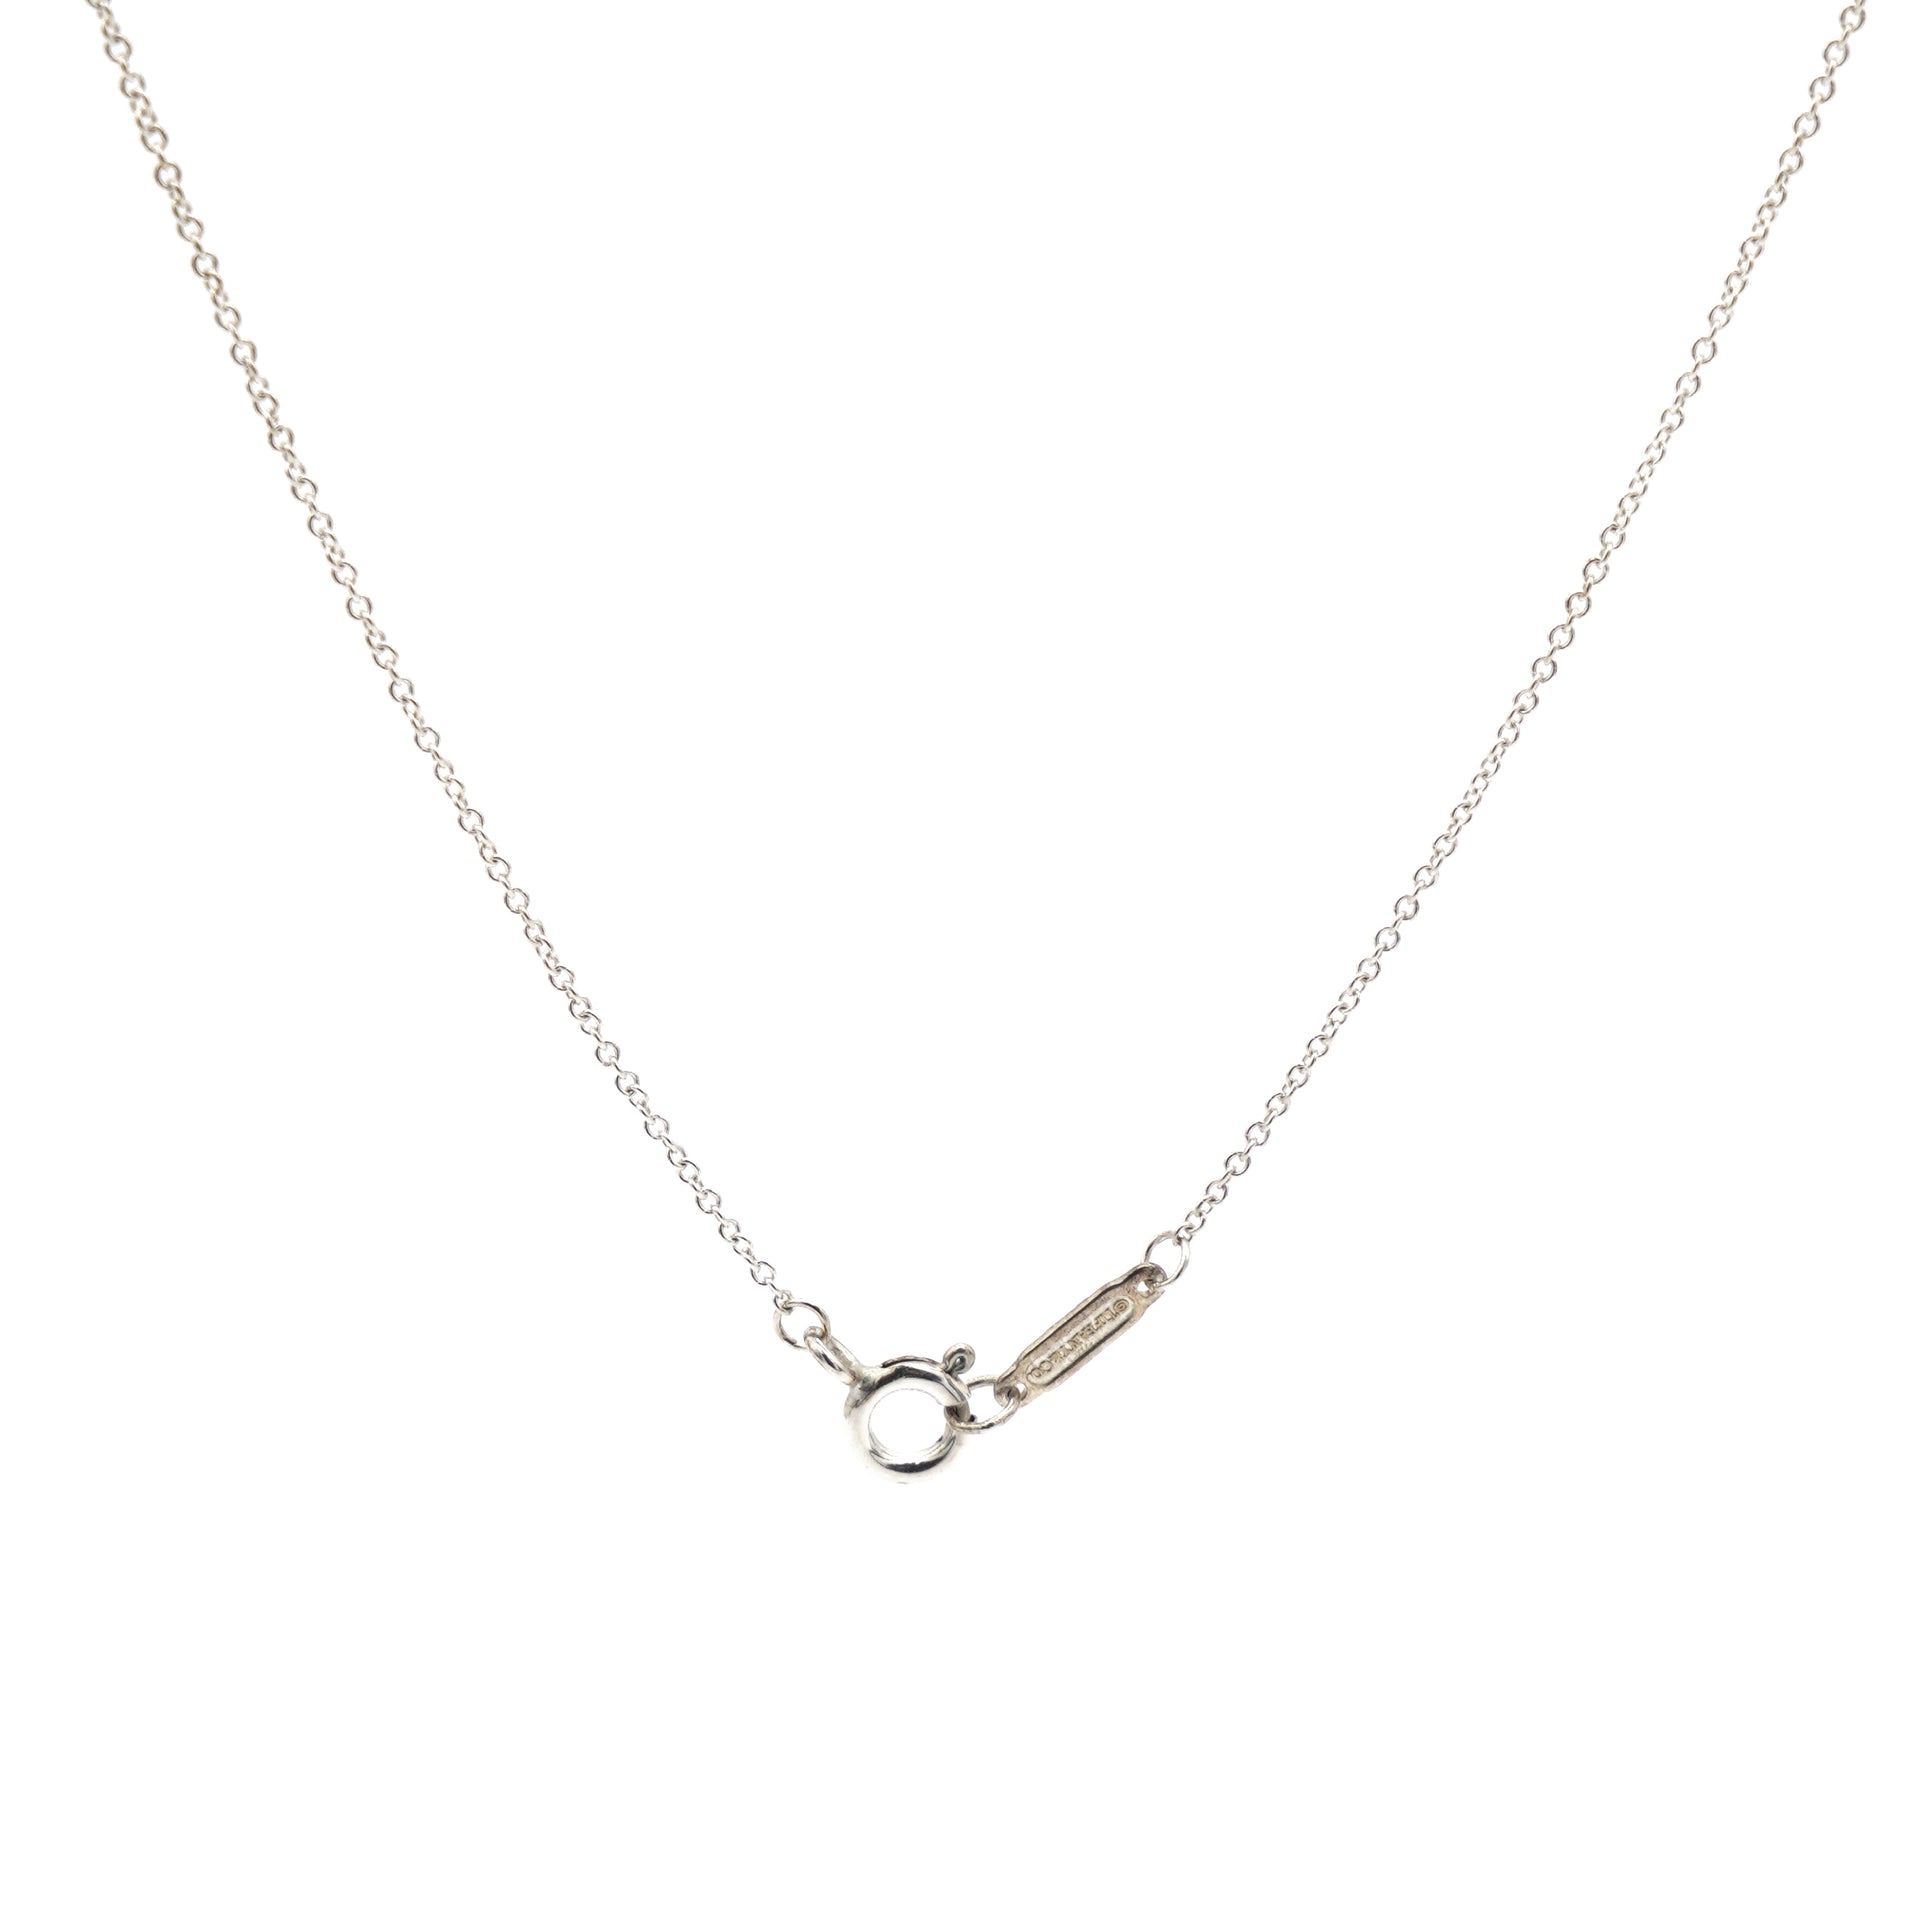 Sterling Silver Heart Key Pendant Necklace